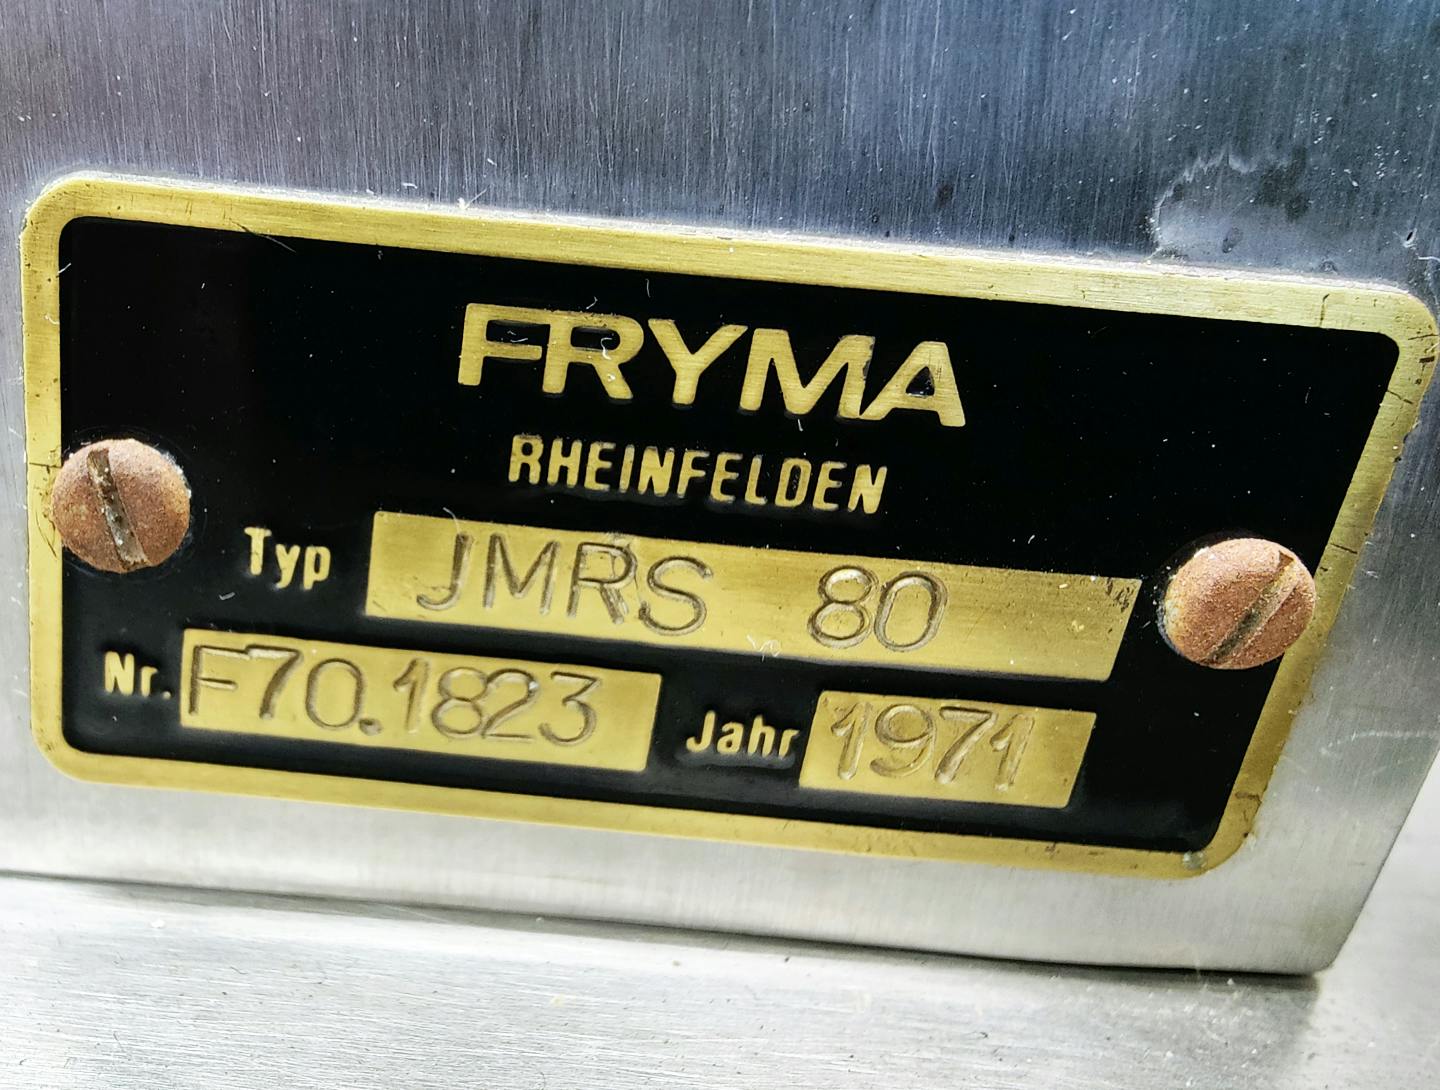 Fryma JMRS 80 - Broyeur à jet - image 6